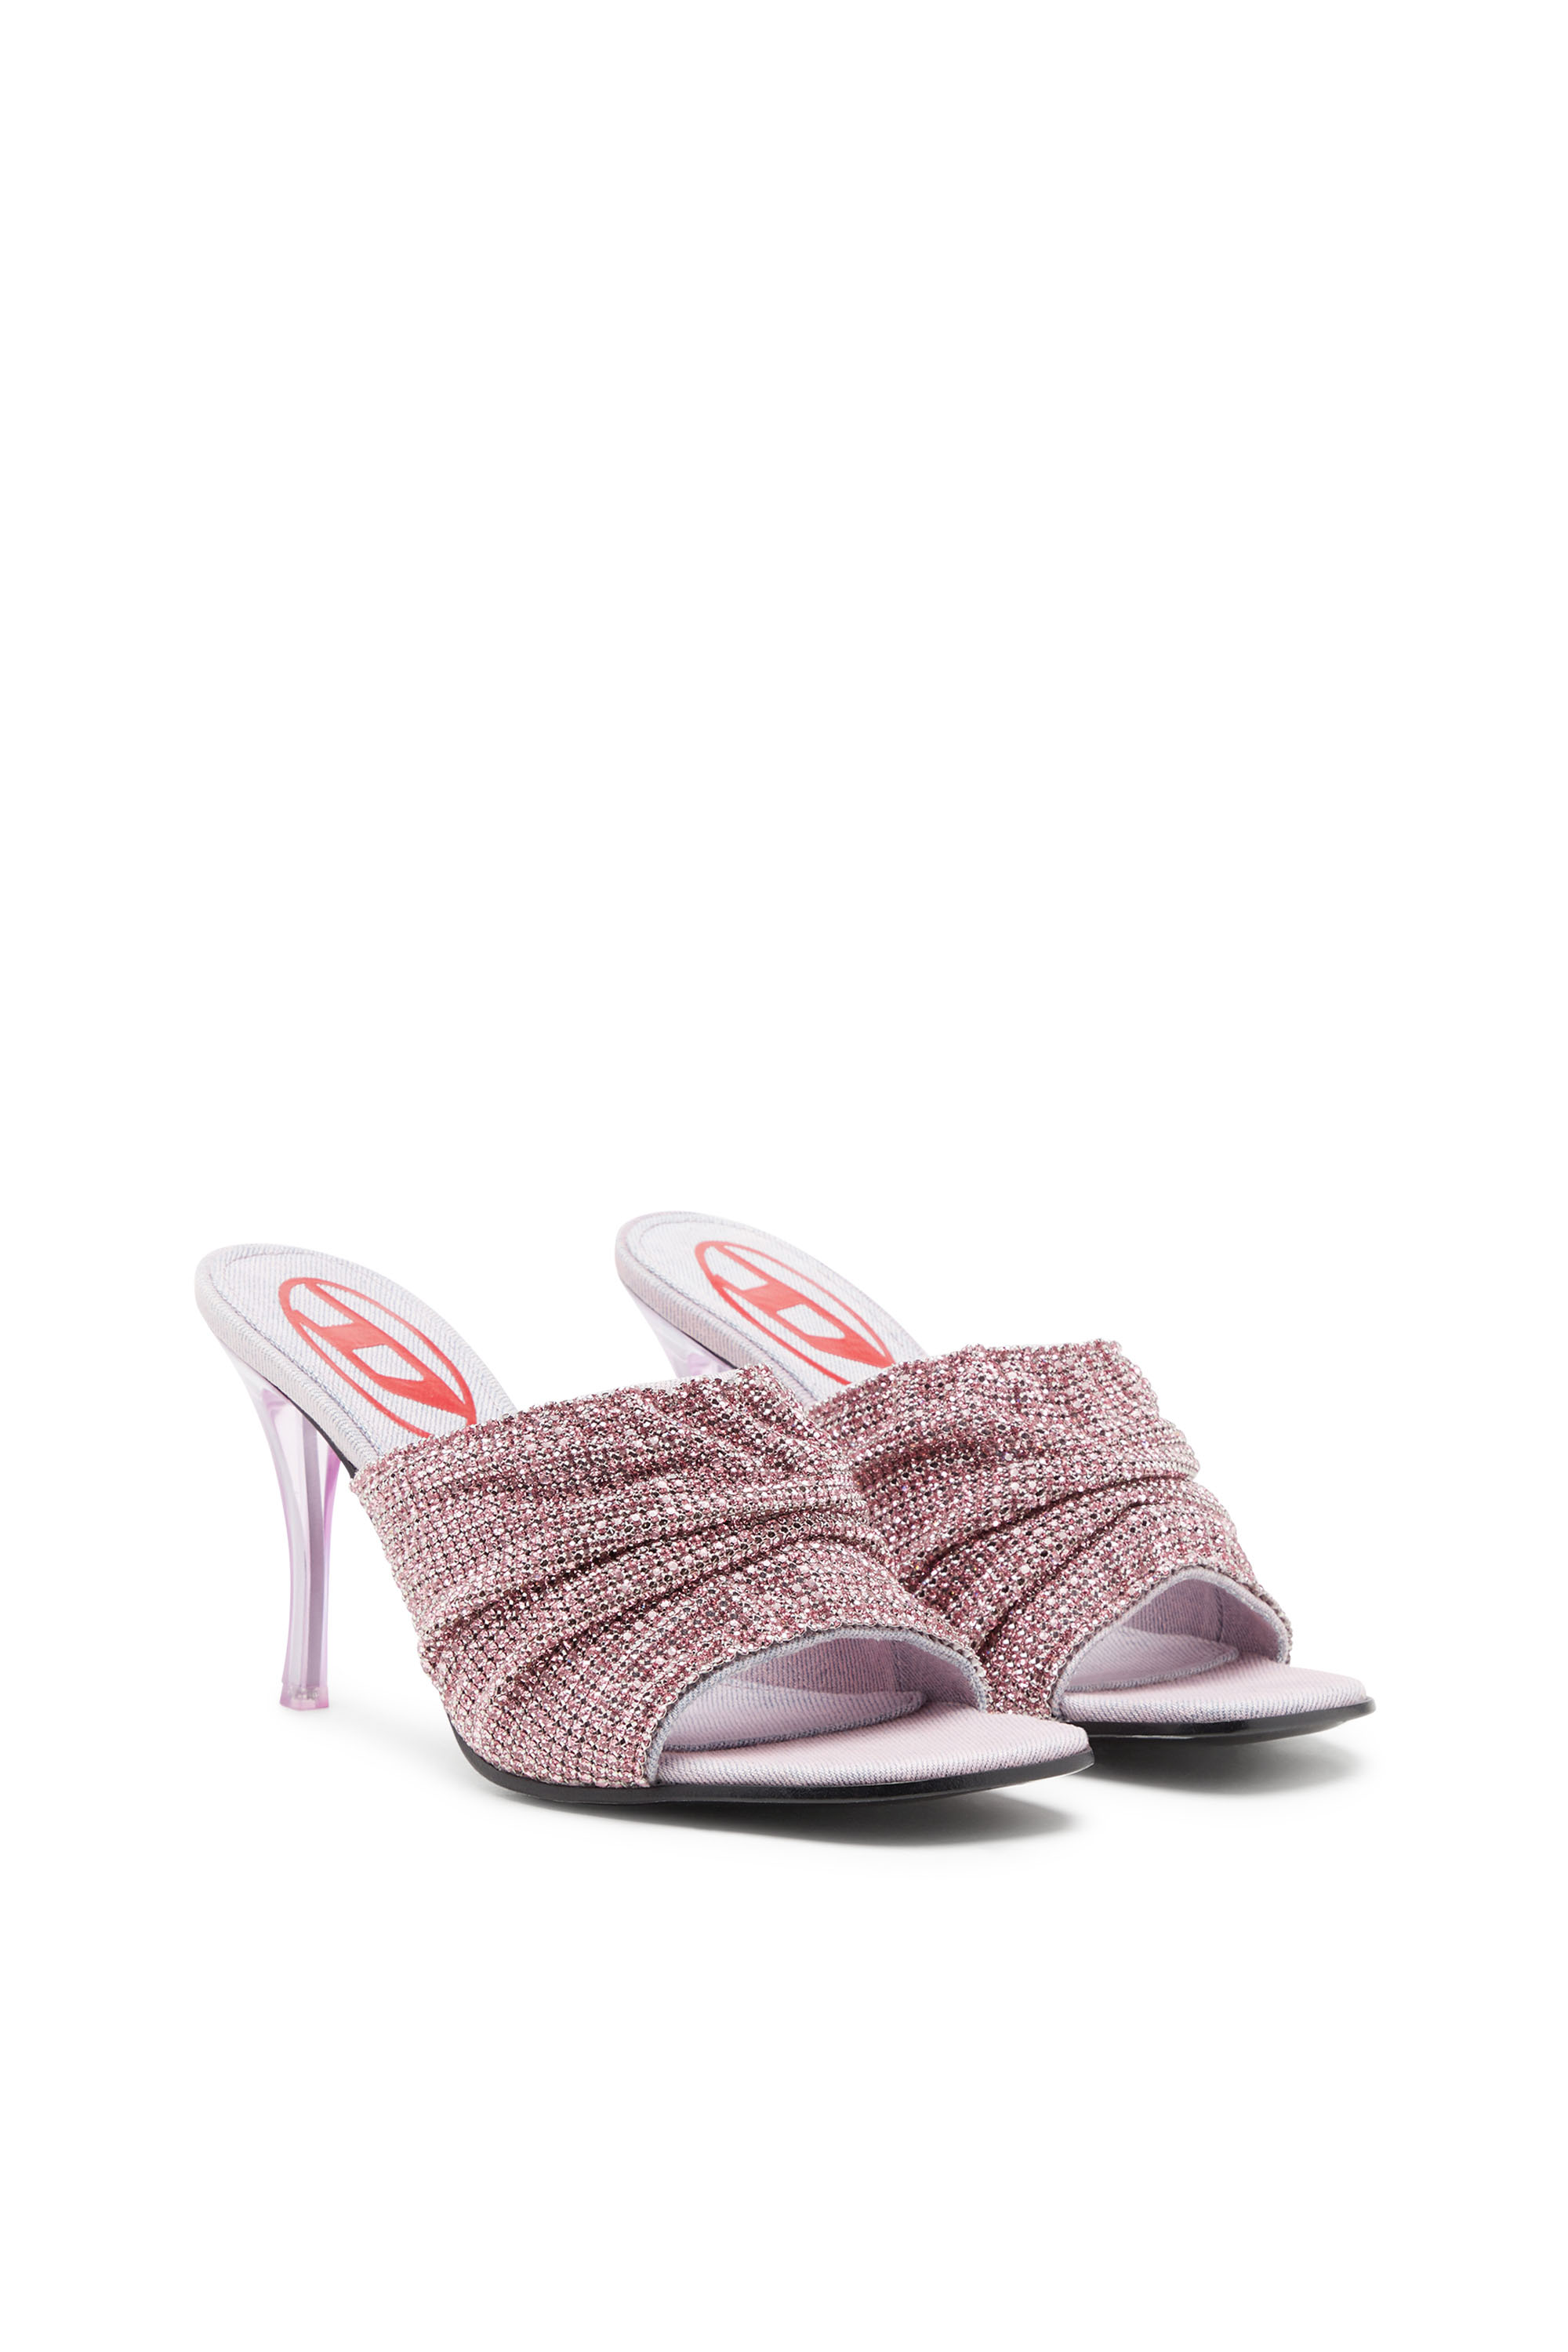 Diesel - D-SYDNEY SDL S, Woman D-Sydney Sdl S Sandals - Mule sandals with rhinestone band in Pink - Image 3